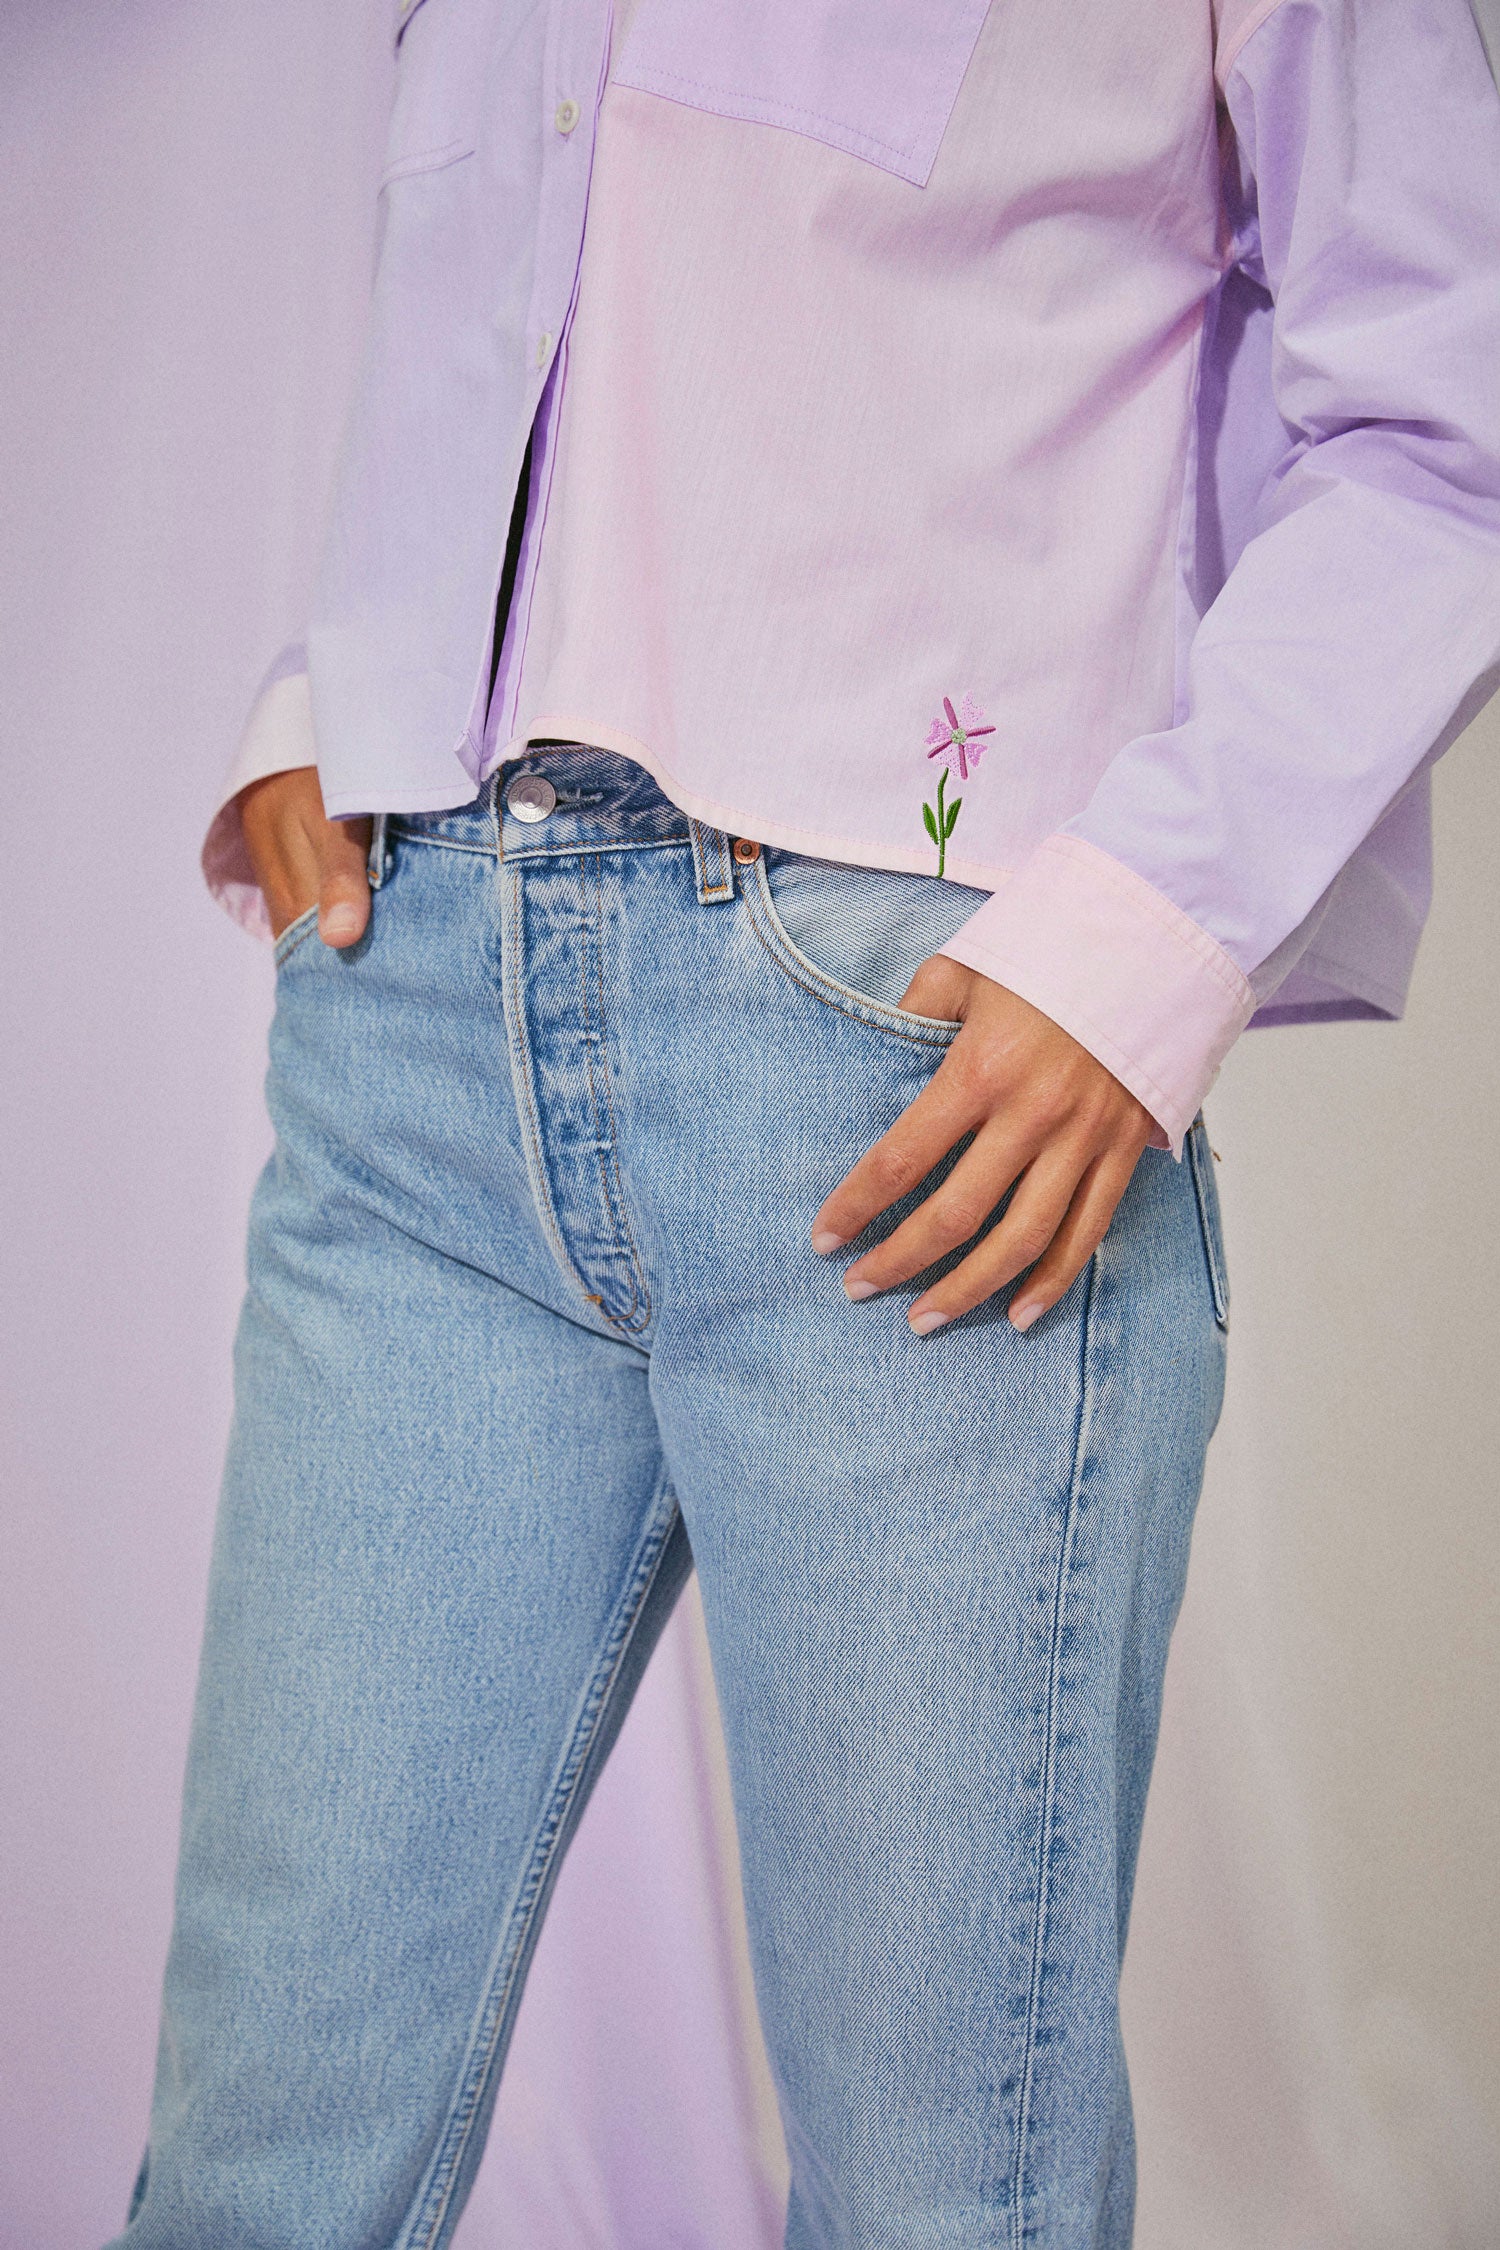 Women's Shirt, Pink lilac colourblock shirt, Jules Utility Shirt Cotton. Embroidered flower at the hem can be seen.